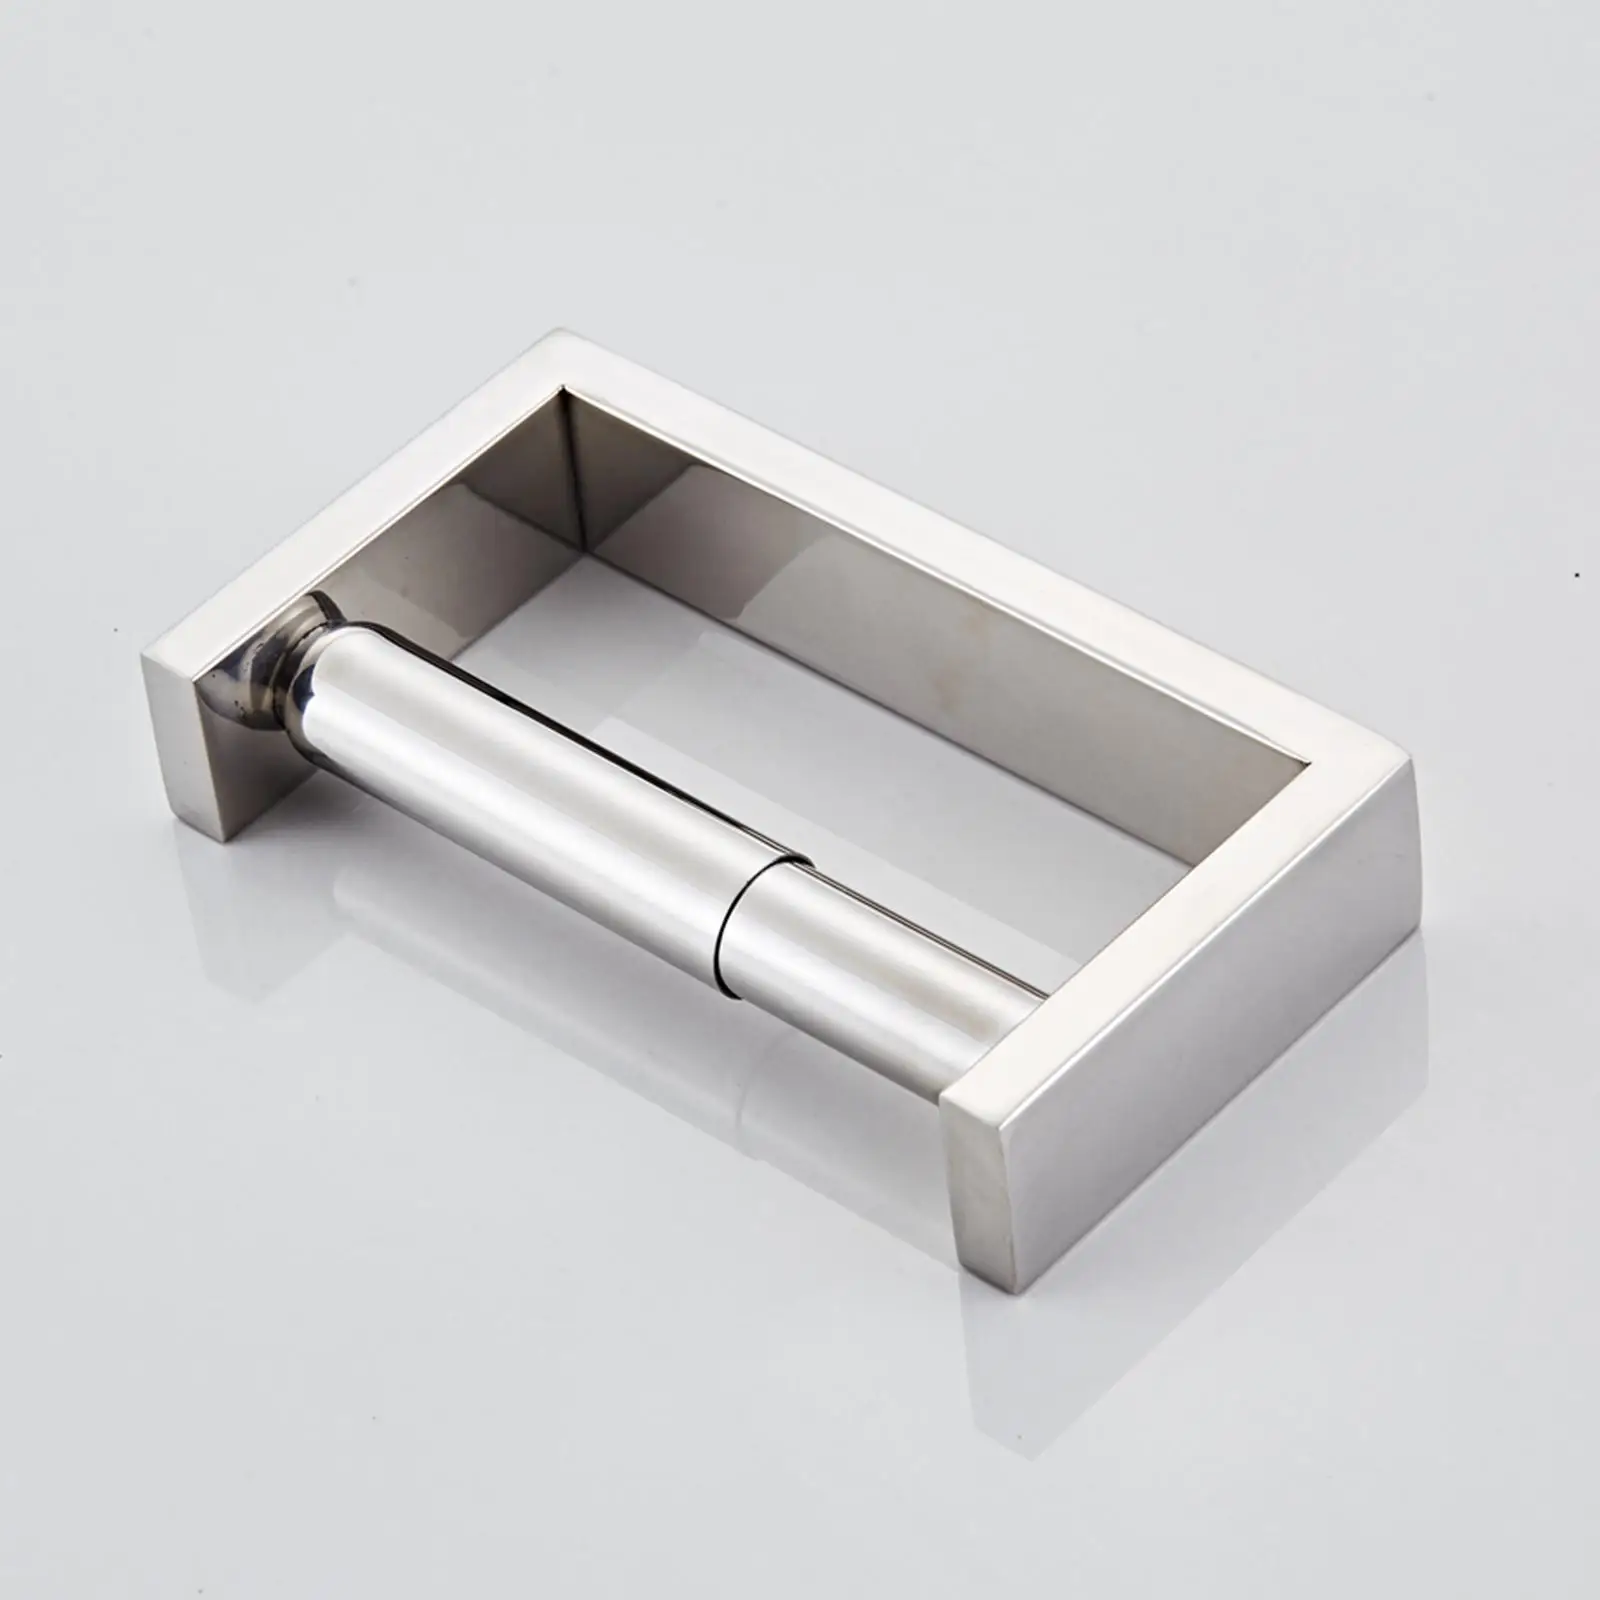 Bathroom Toilet Paper Holder, Versatile Rustproof Modern Stainless Steel Toilet Paper Roll Storage for Home Use